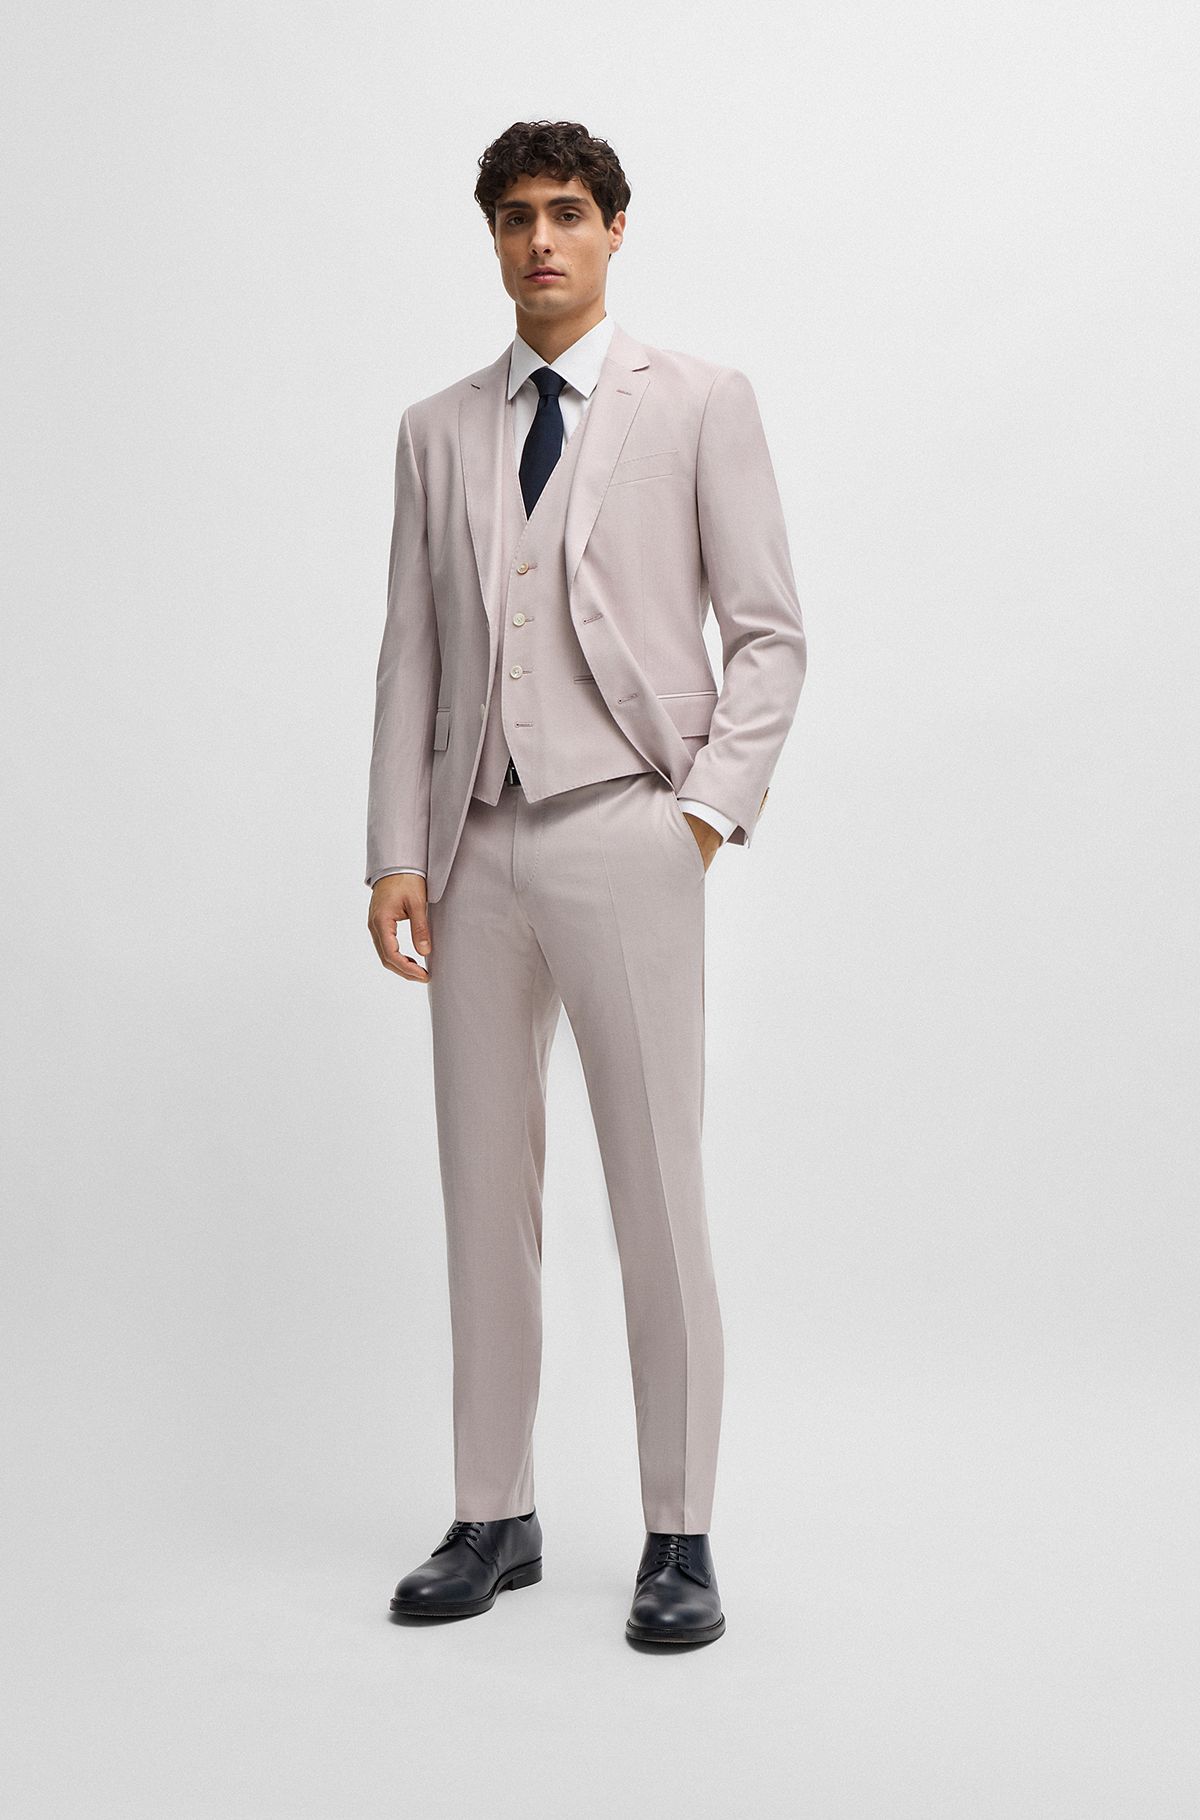 HUGO BOSS Three-piece Suits – Elaborate designs